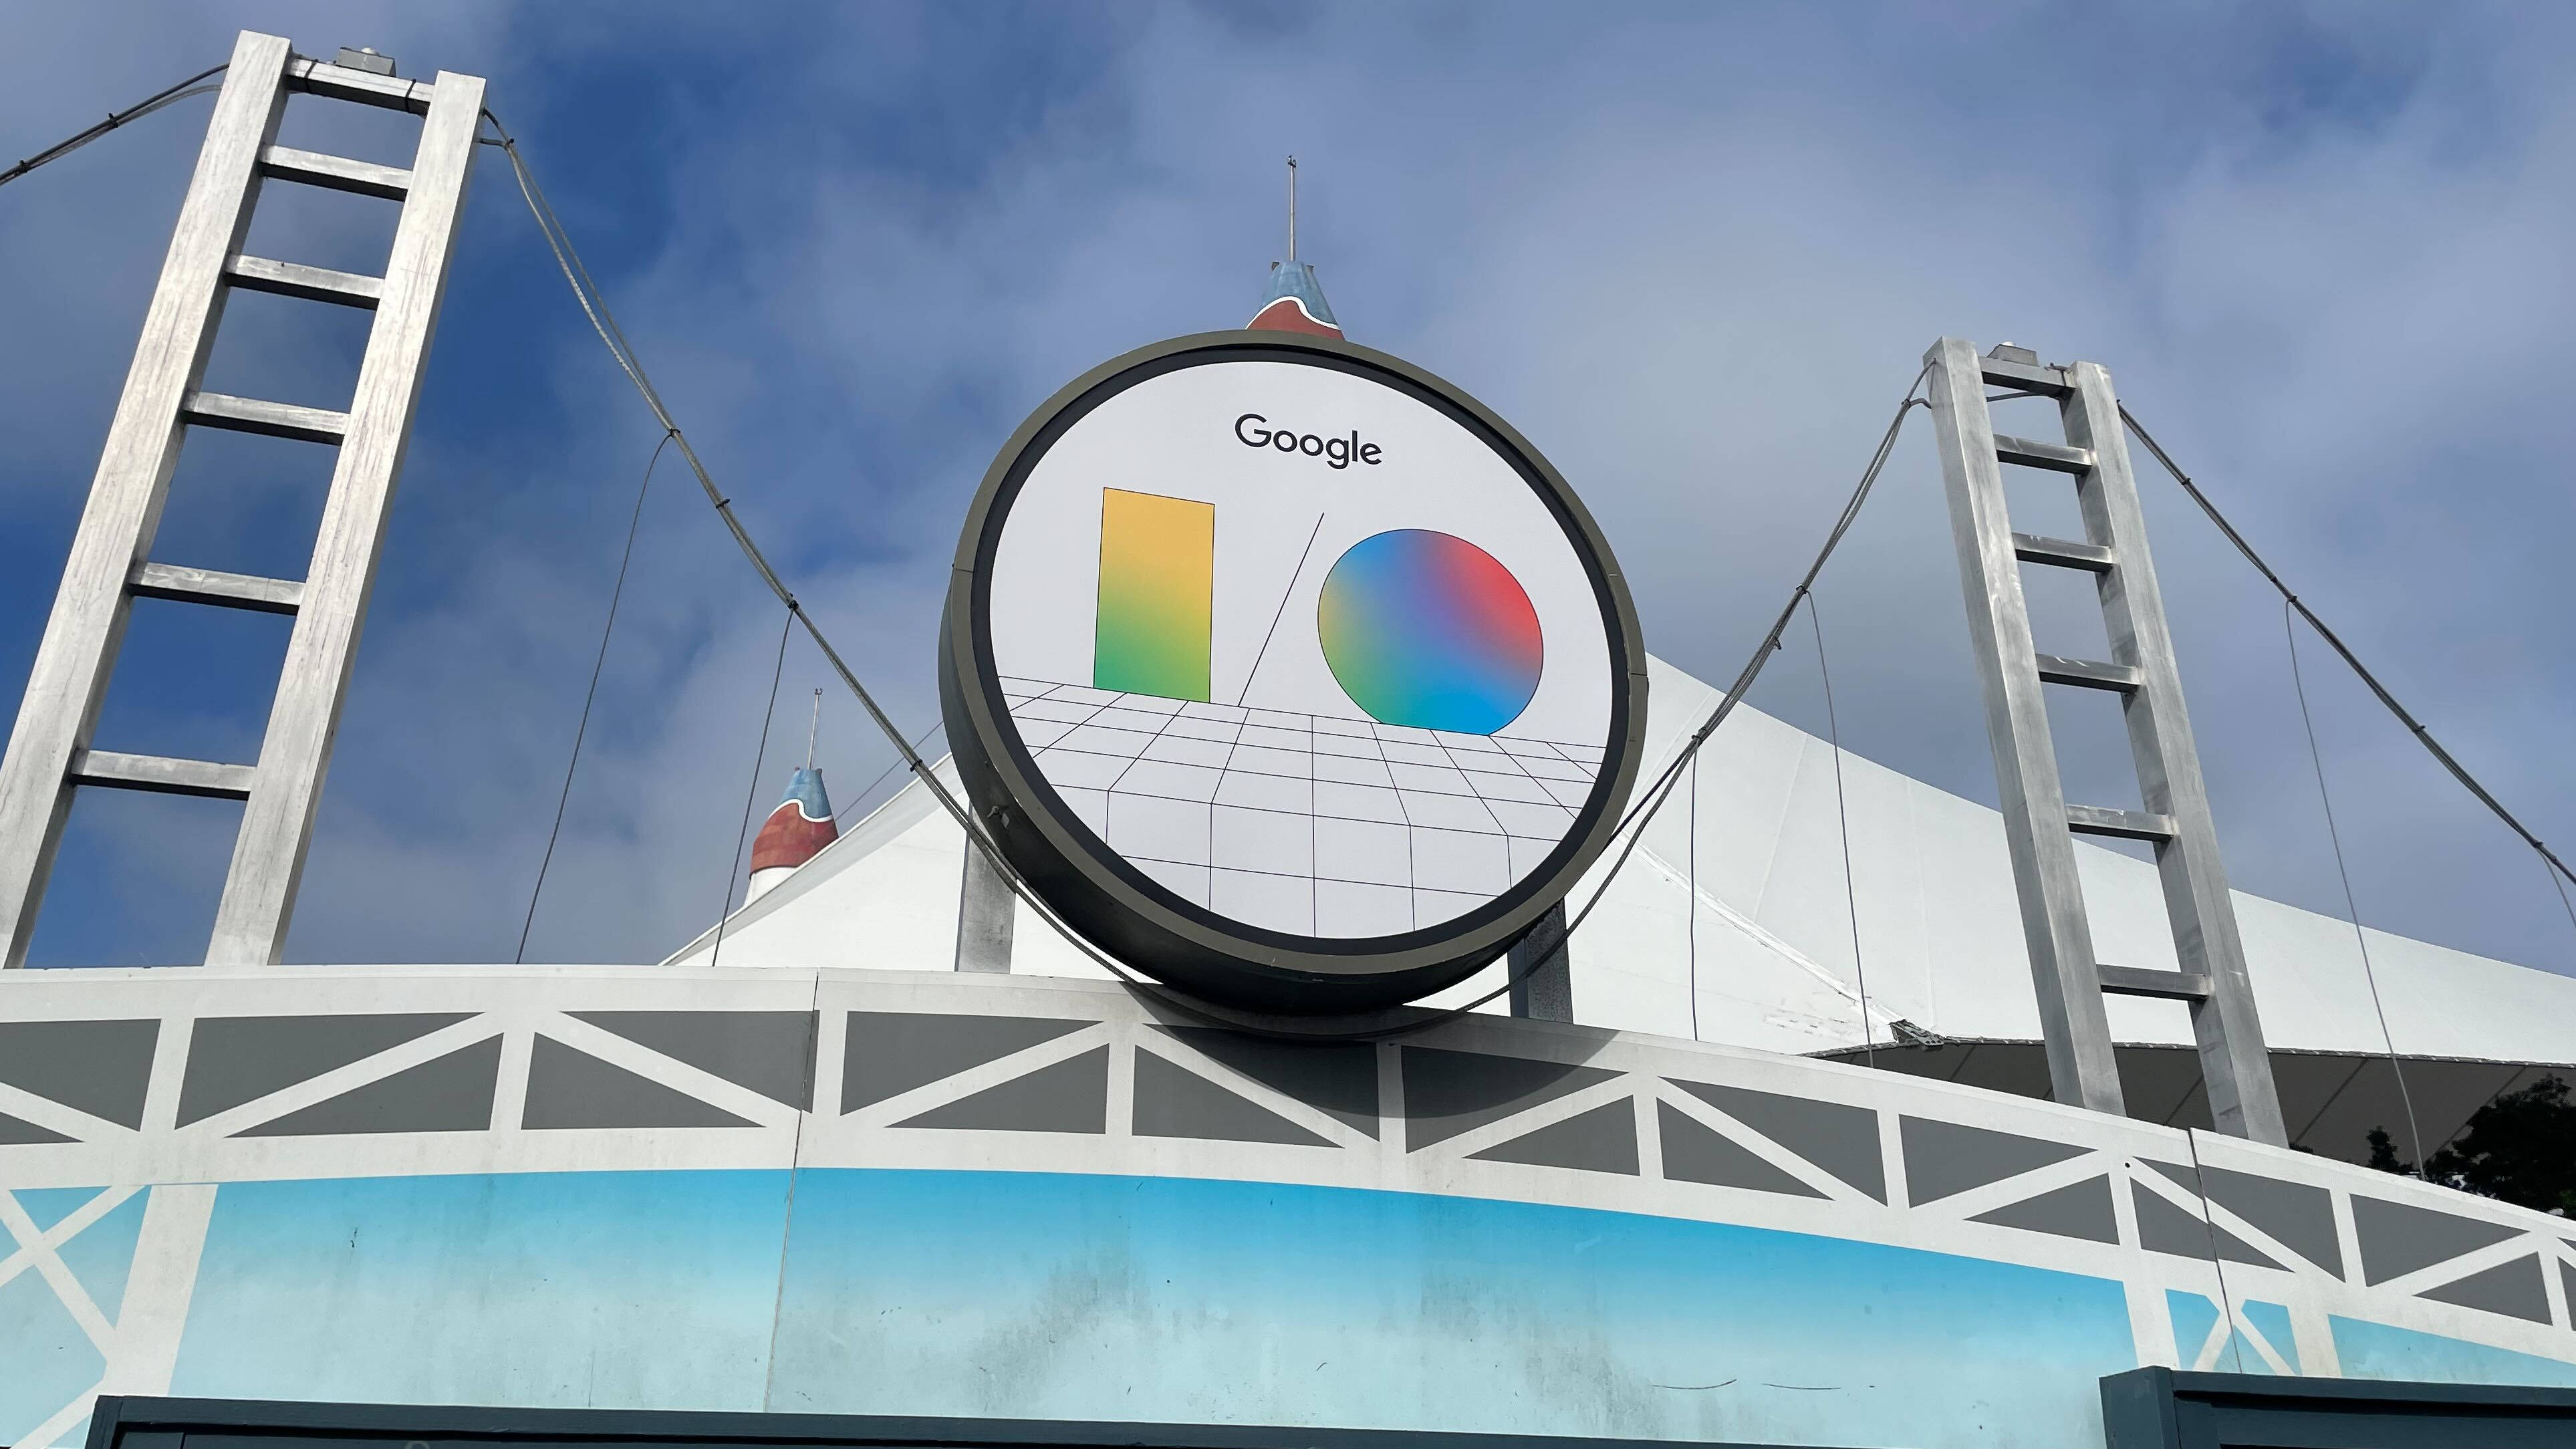 The Google I/O sign